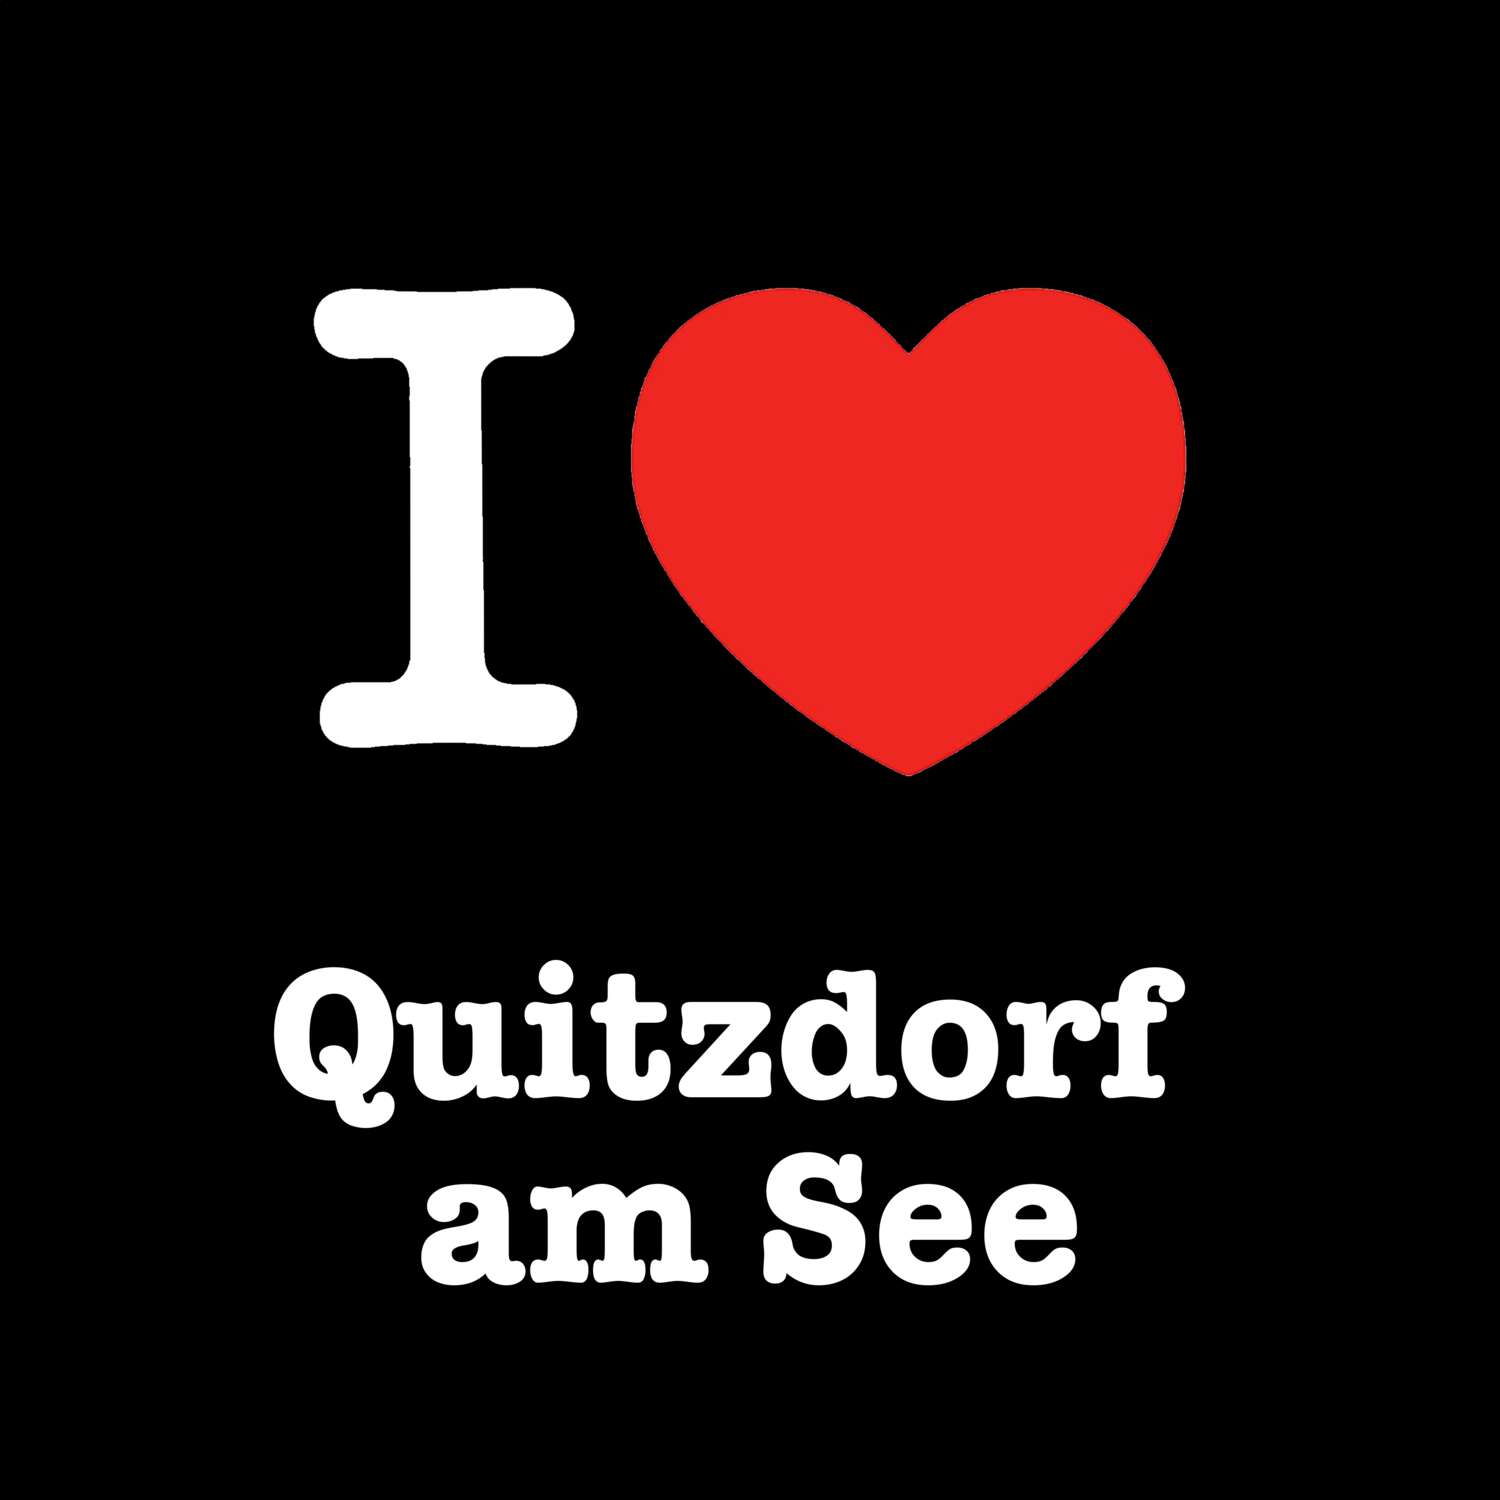 Quitzdorf am See T-Shirt »I love«